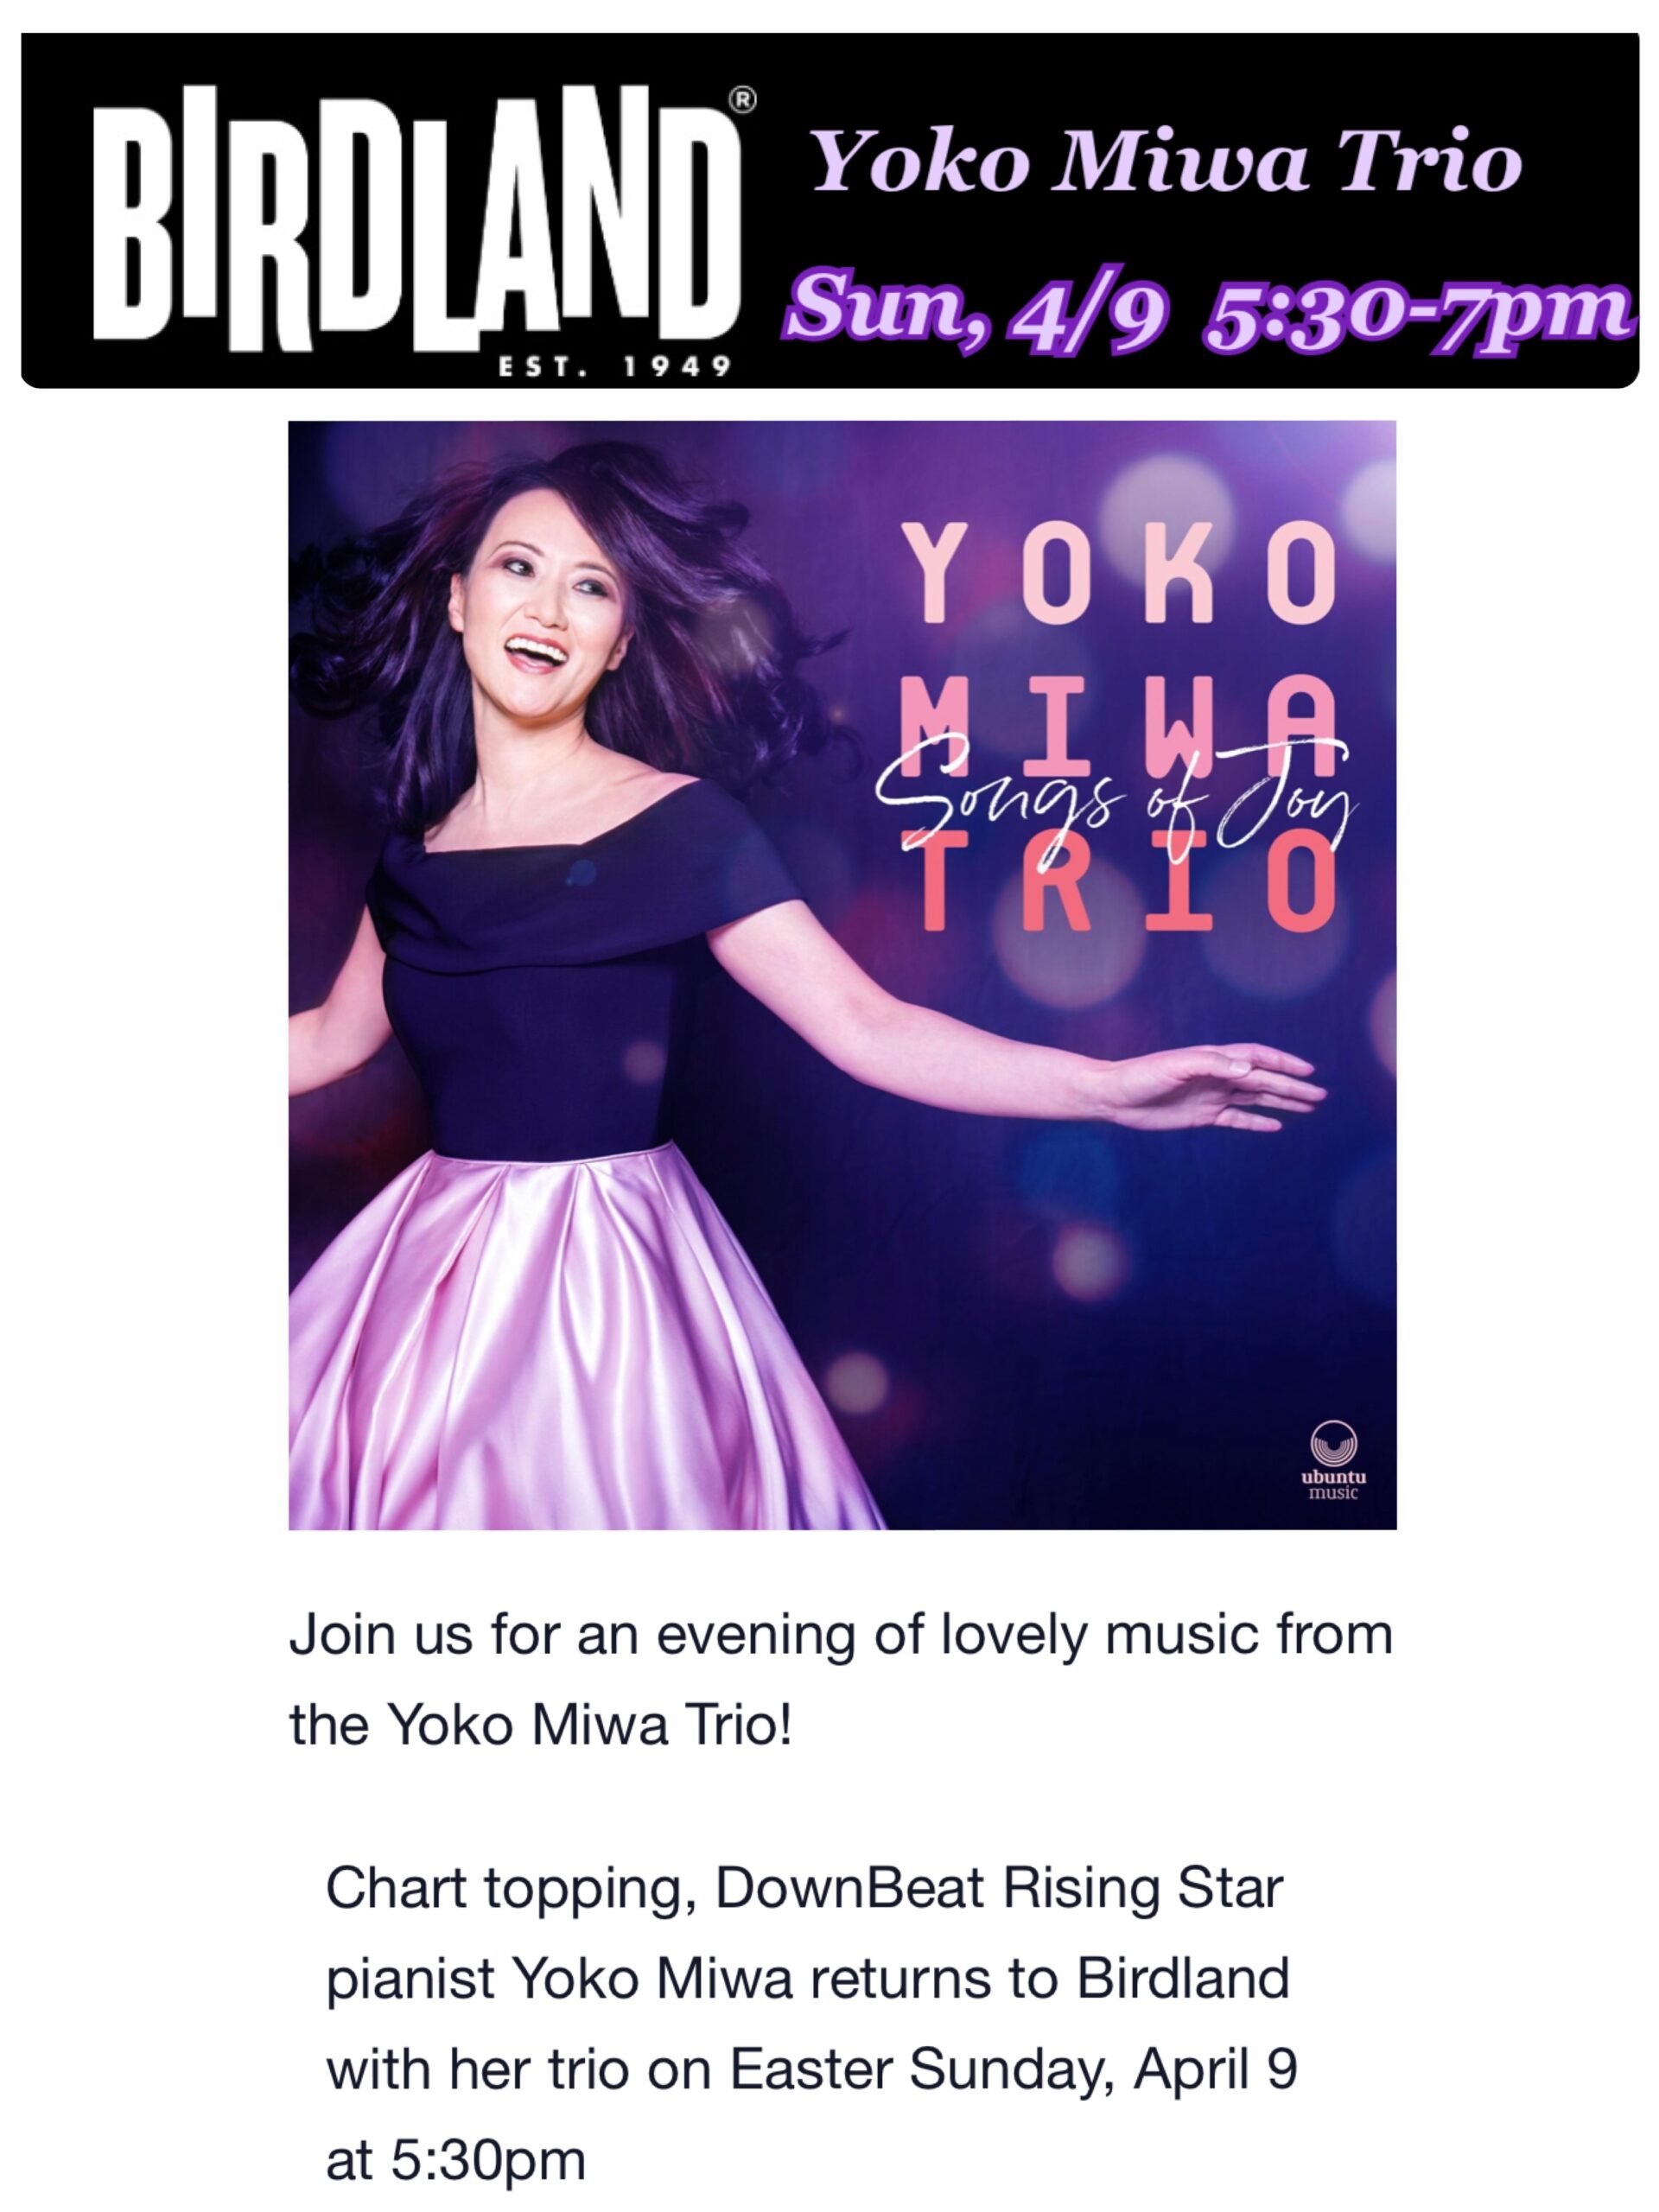 The Yoko Miwa Trio playing at Birdland in New York City Sunday April 9, 2023. One set at 5:30pm